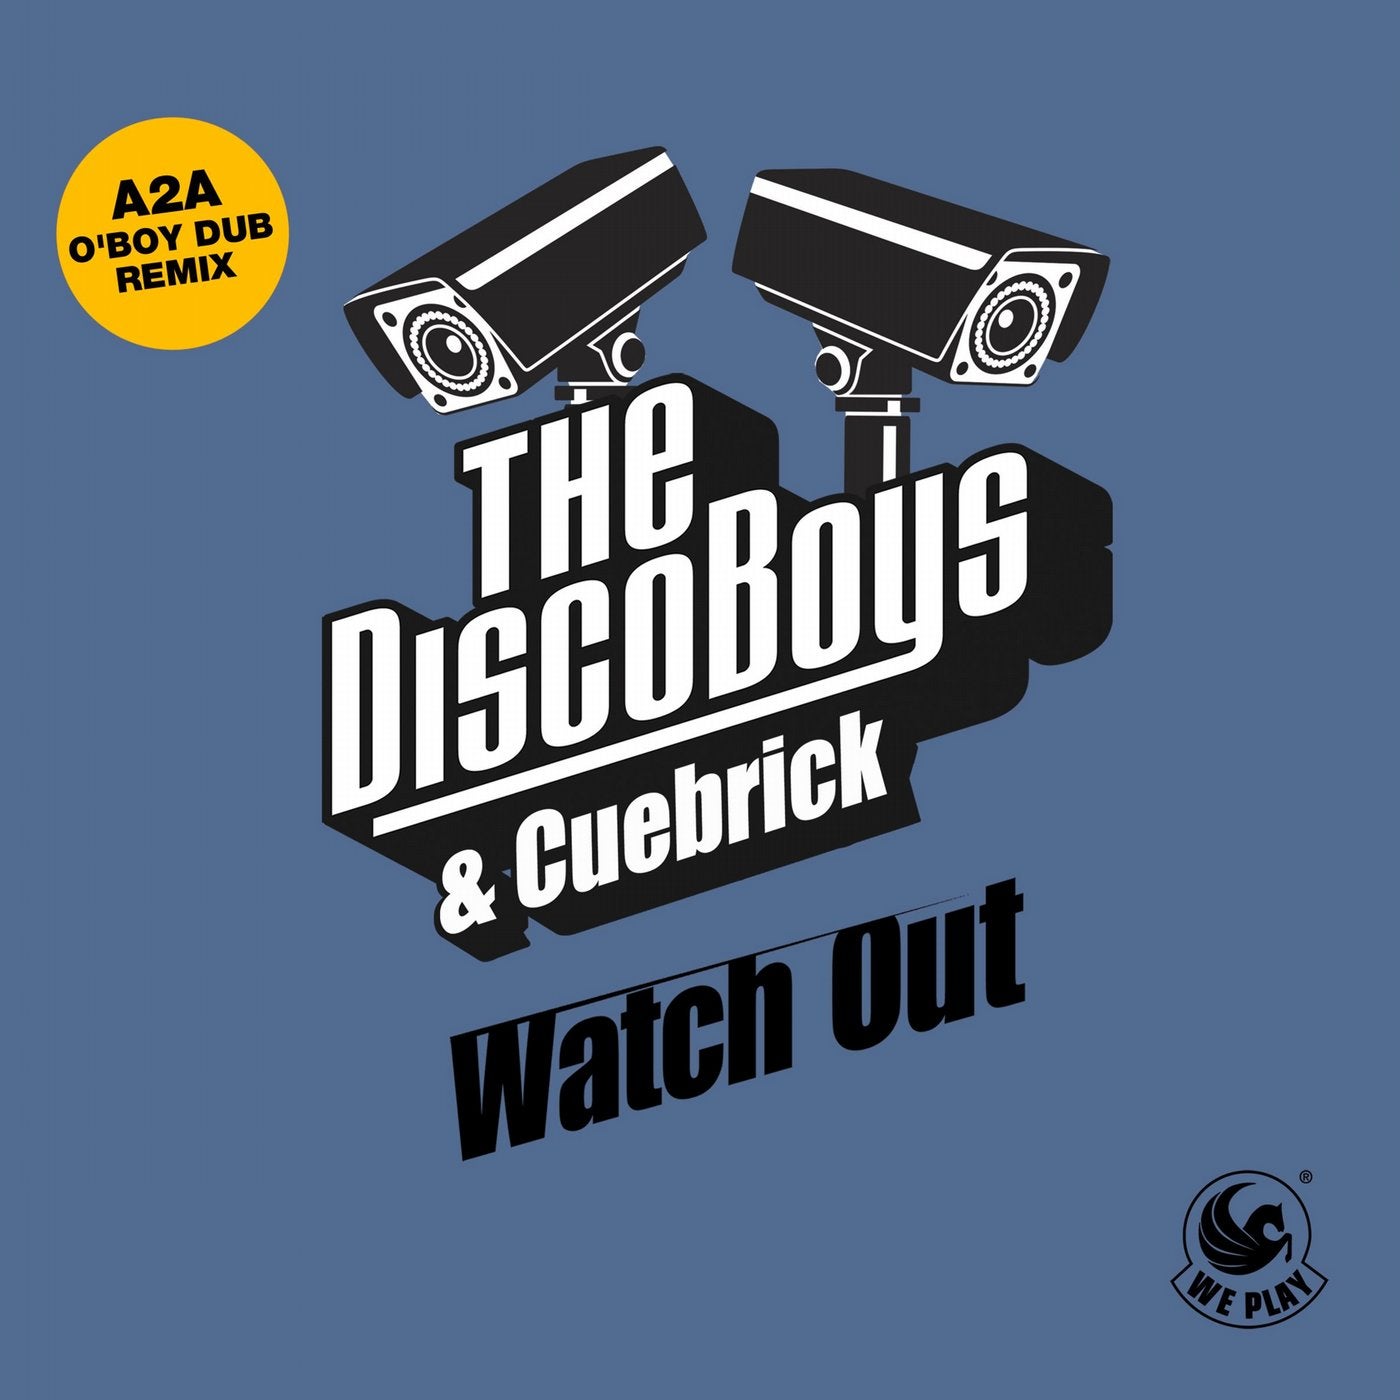 Disco boy. Dub Remix. Music to watch boys to альбом. The Disco boys for you.